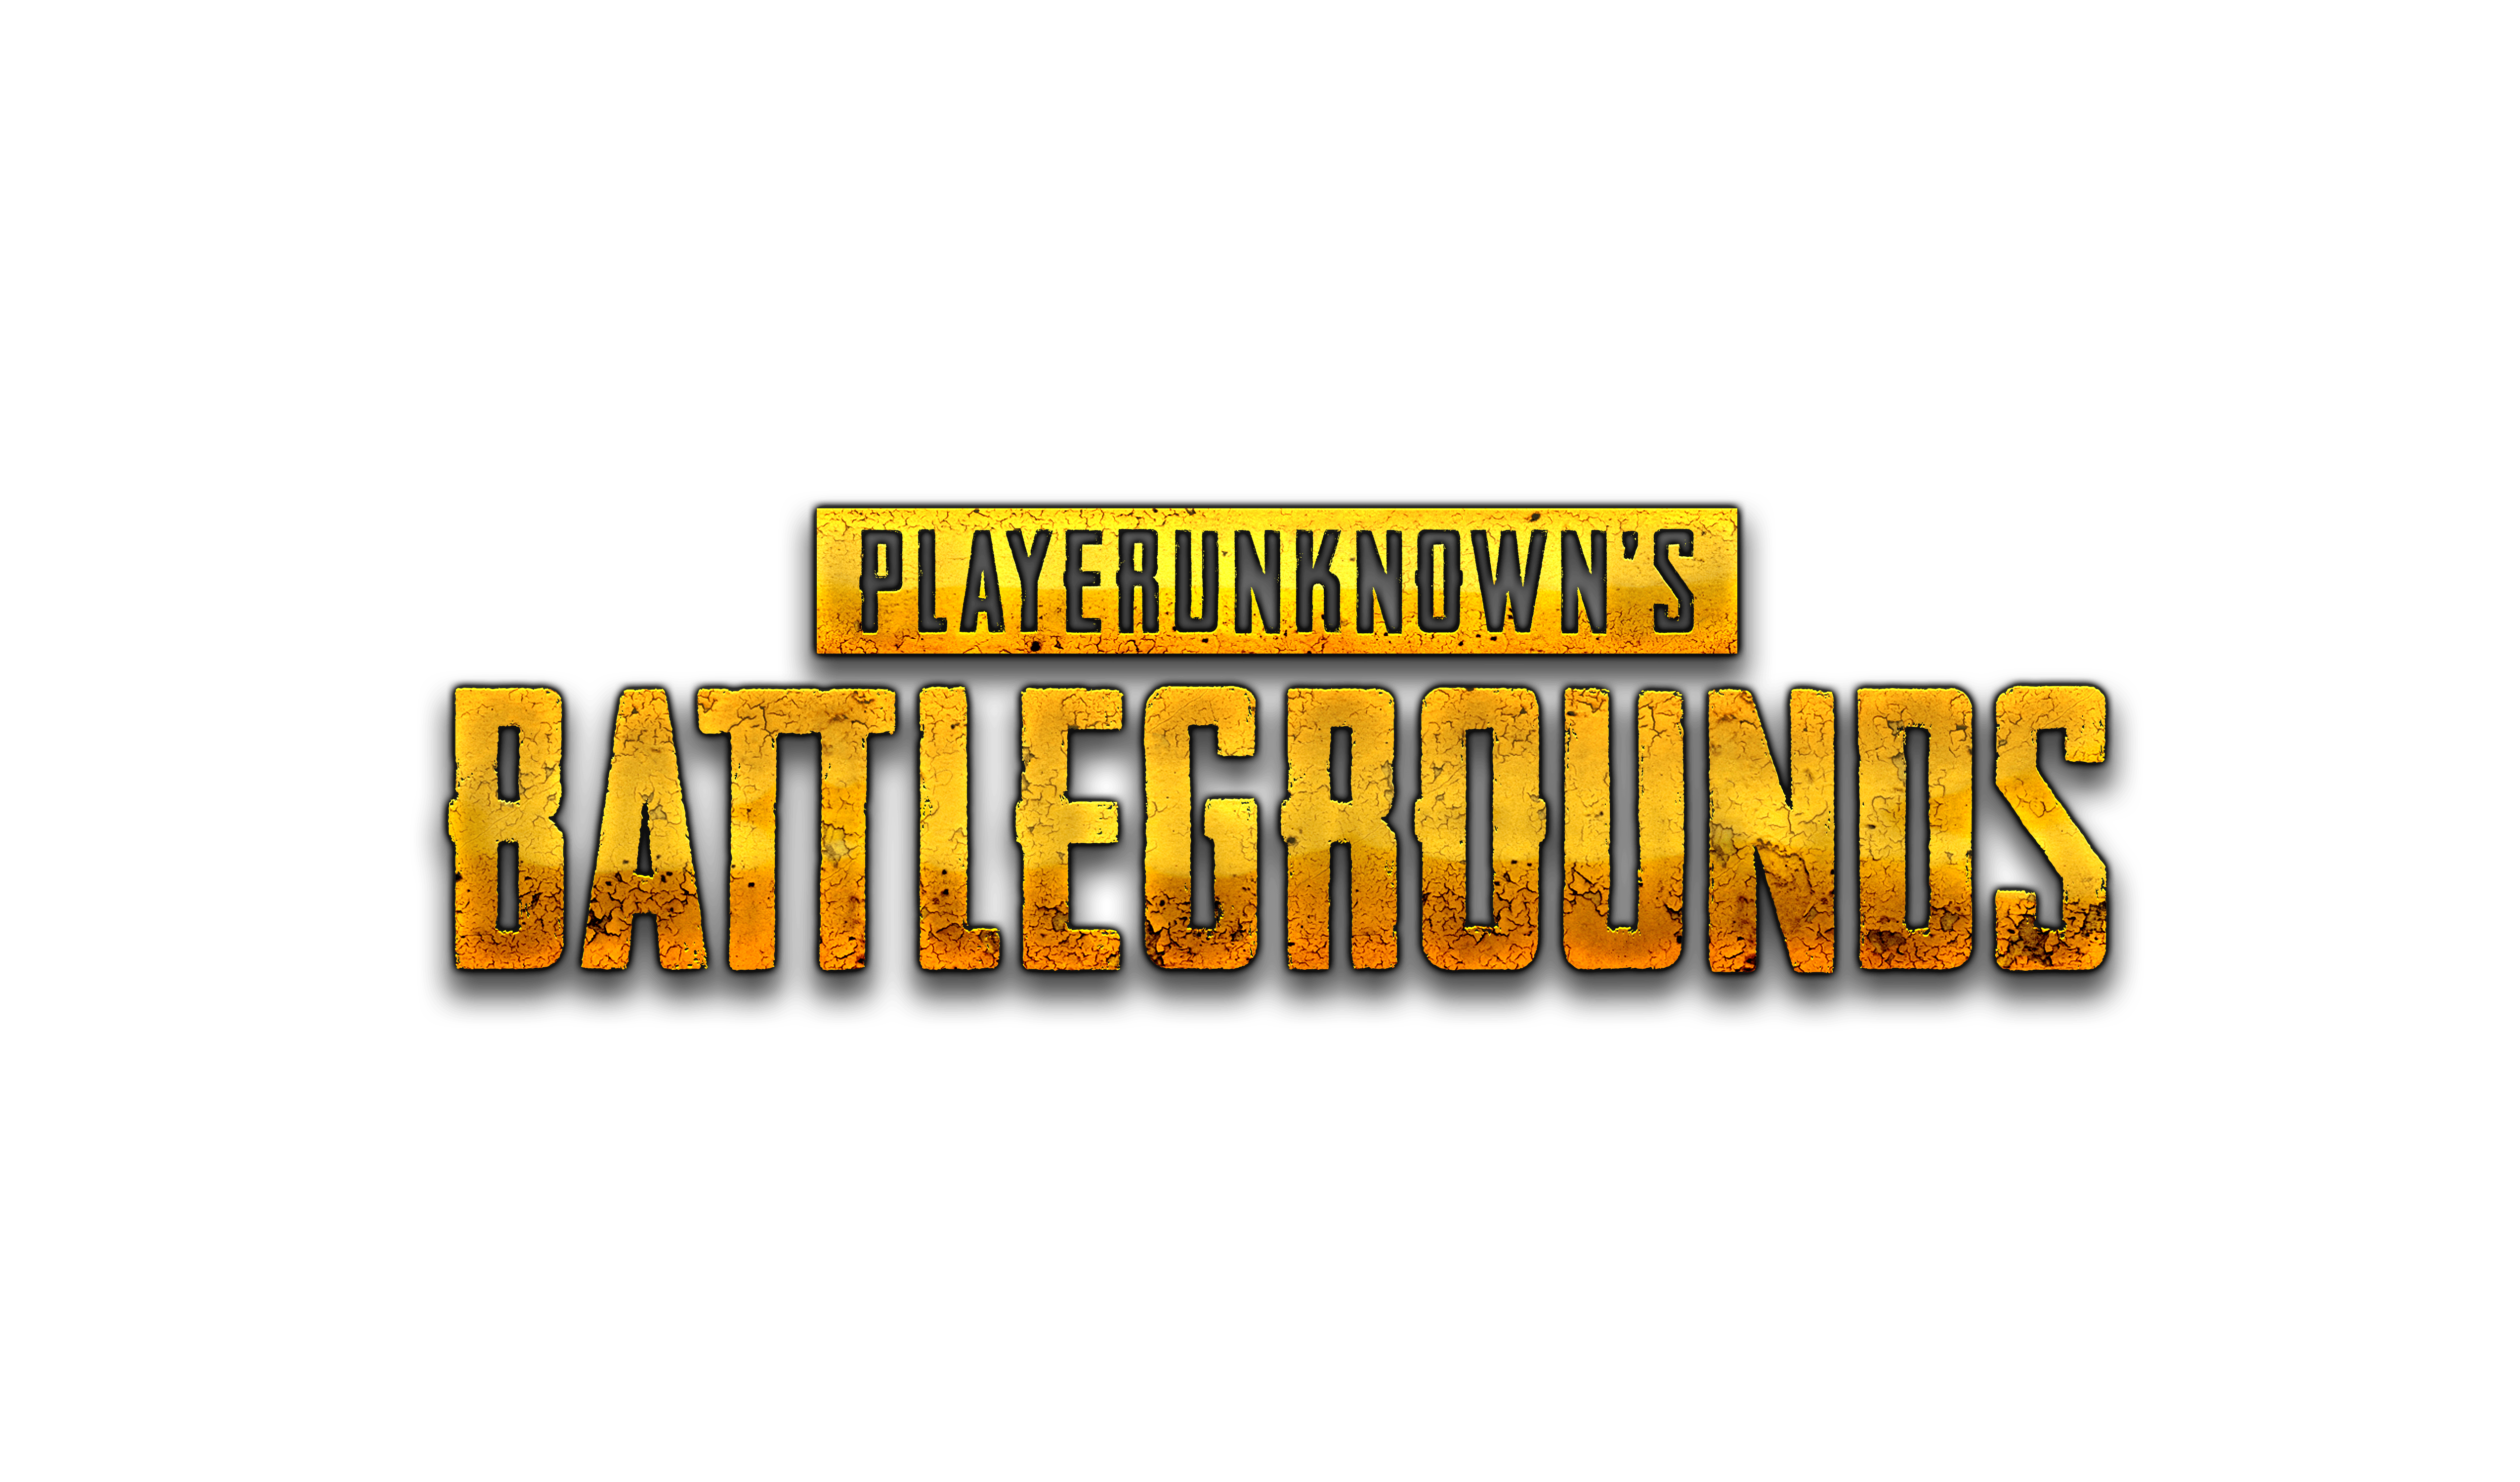 Playerunknown's Battlegrounds Logo (pubg) PNG Image. Png image, Edit logo, Background image hd